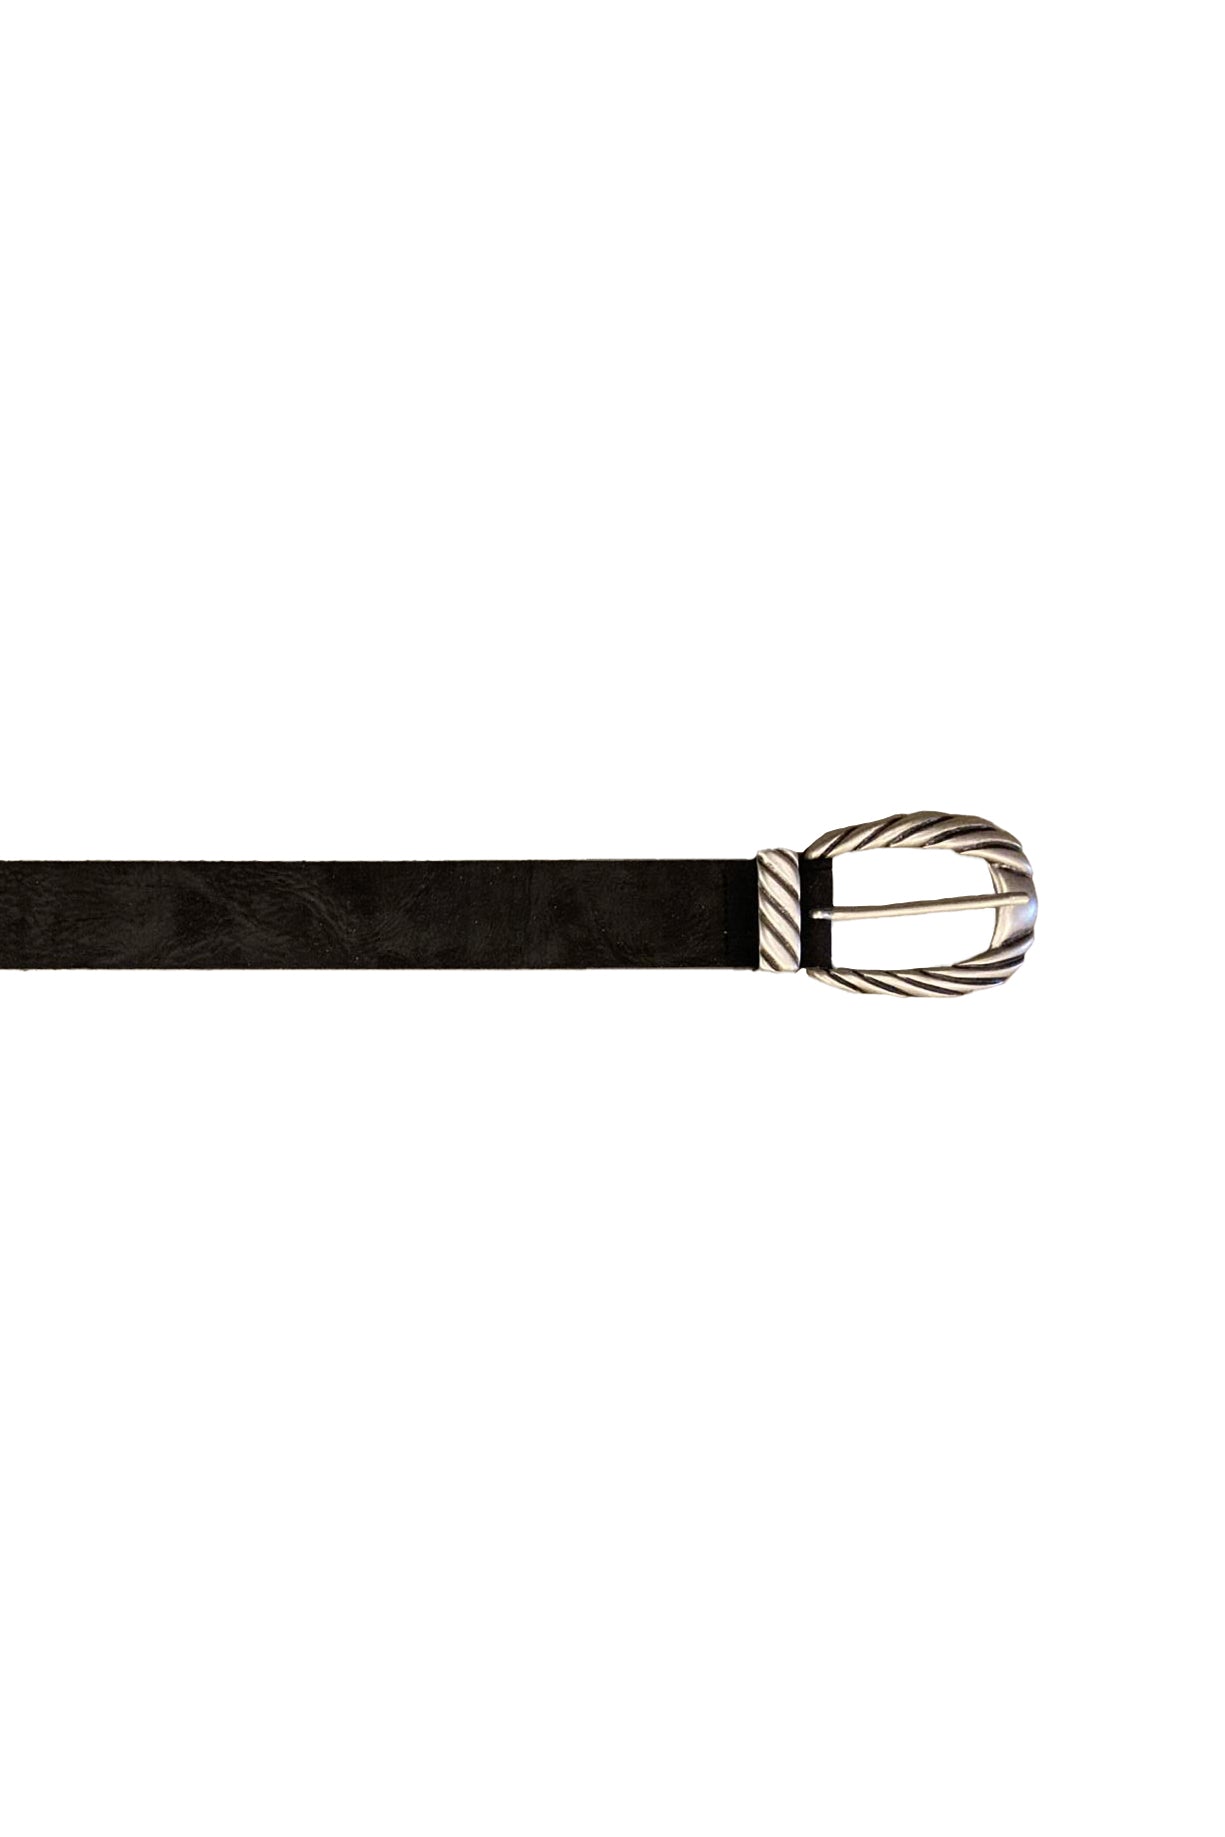 Trezz Marlies Leather Belt - Black - RUM Amsterdam